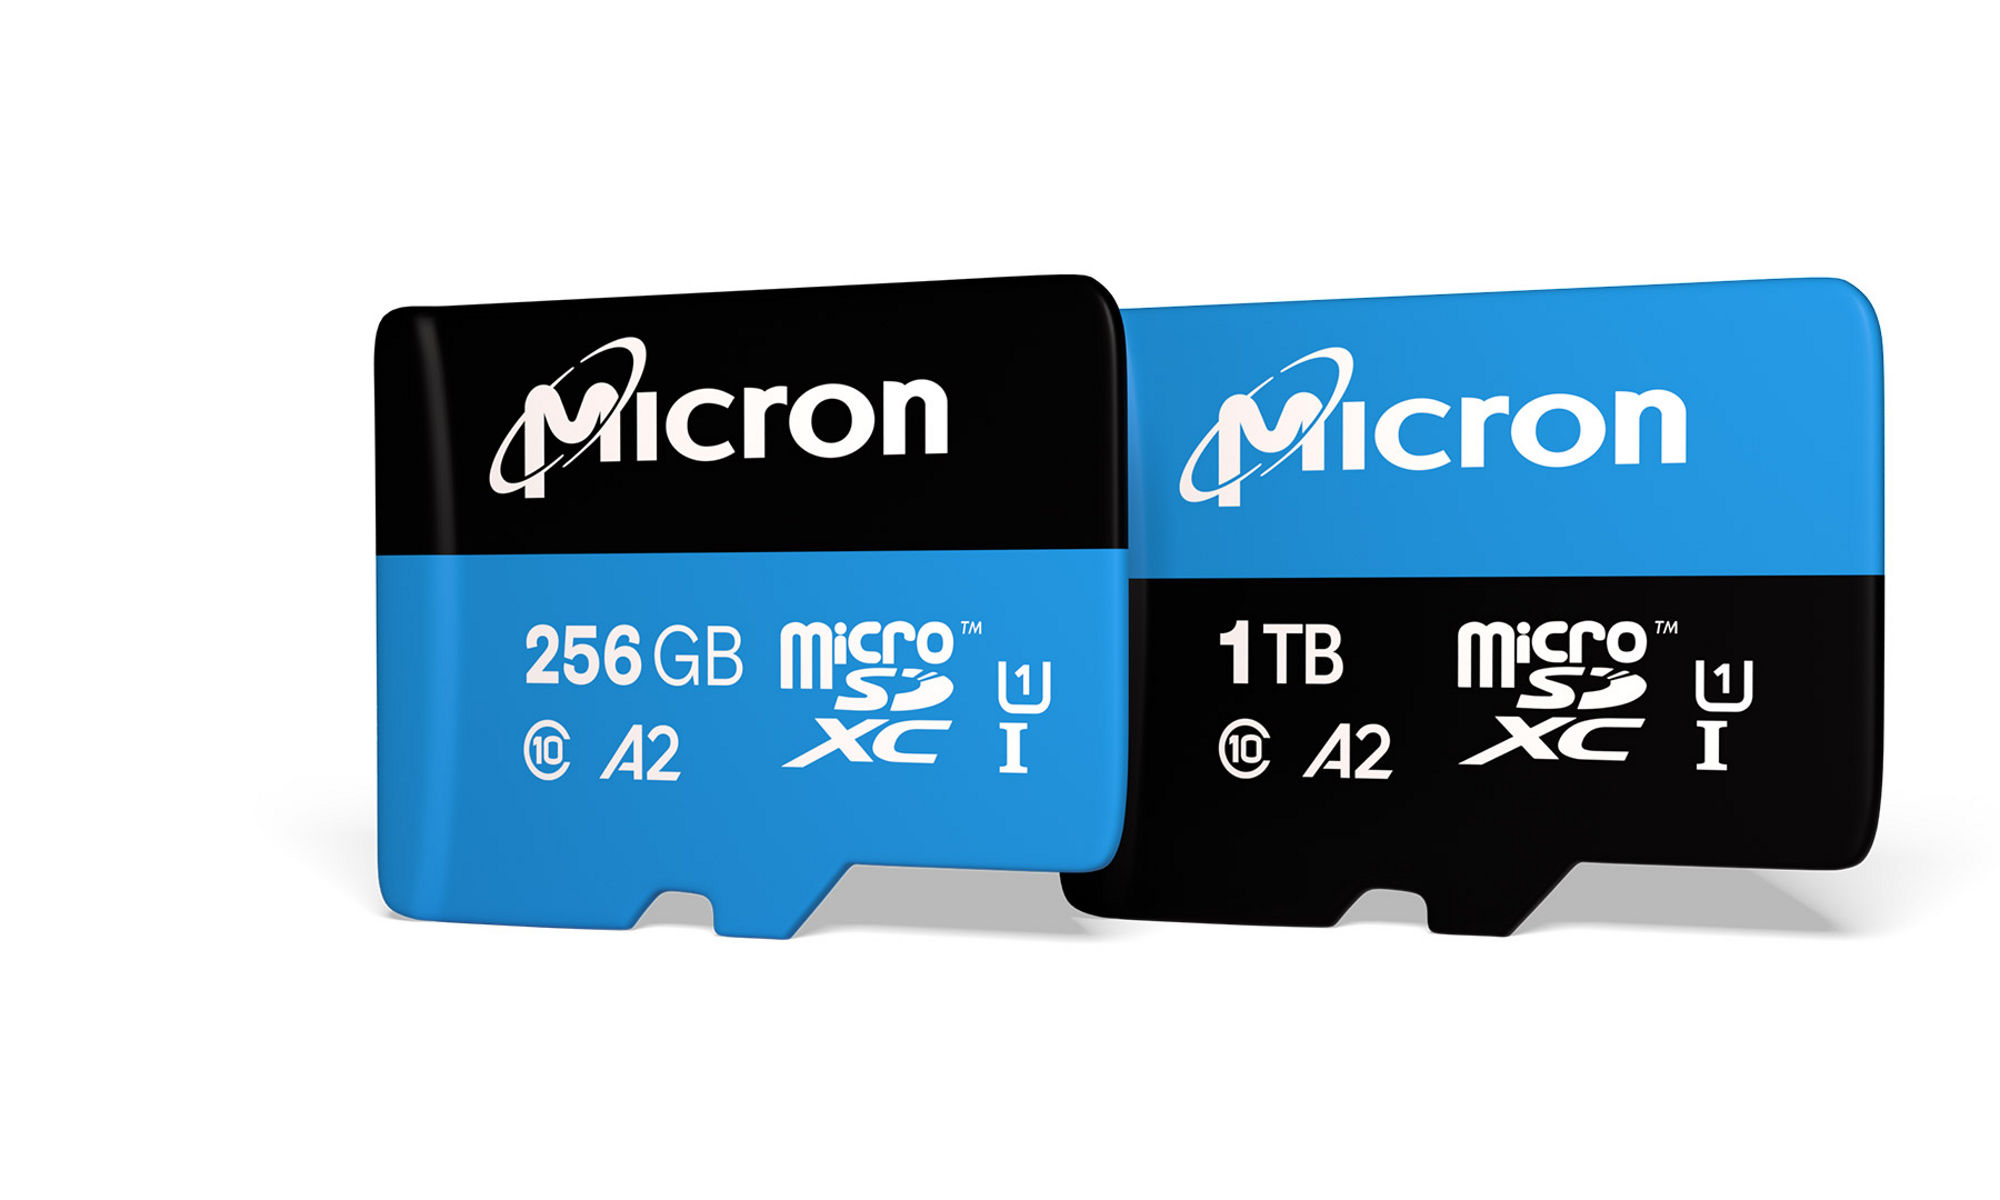 Image of Micron memroy card